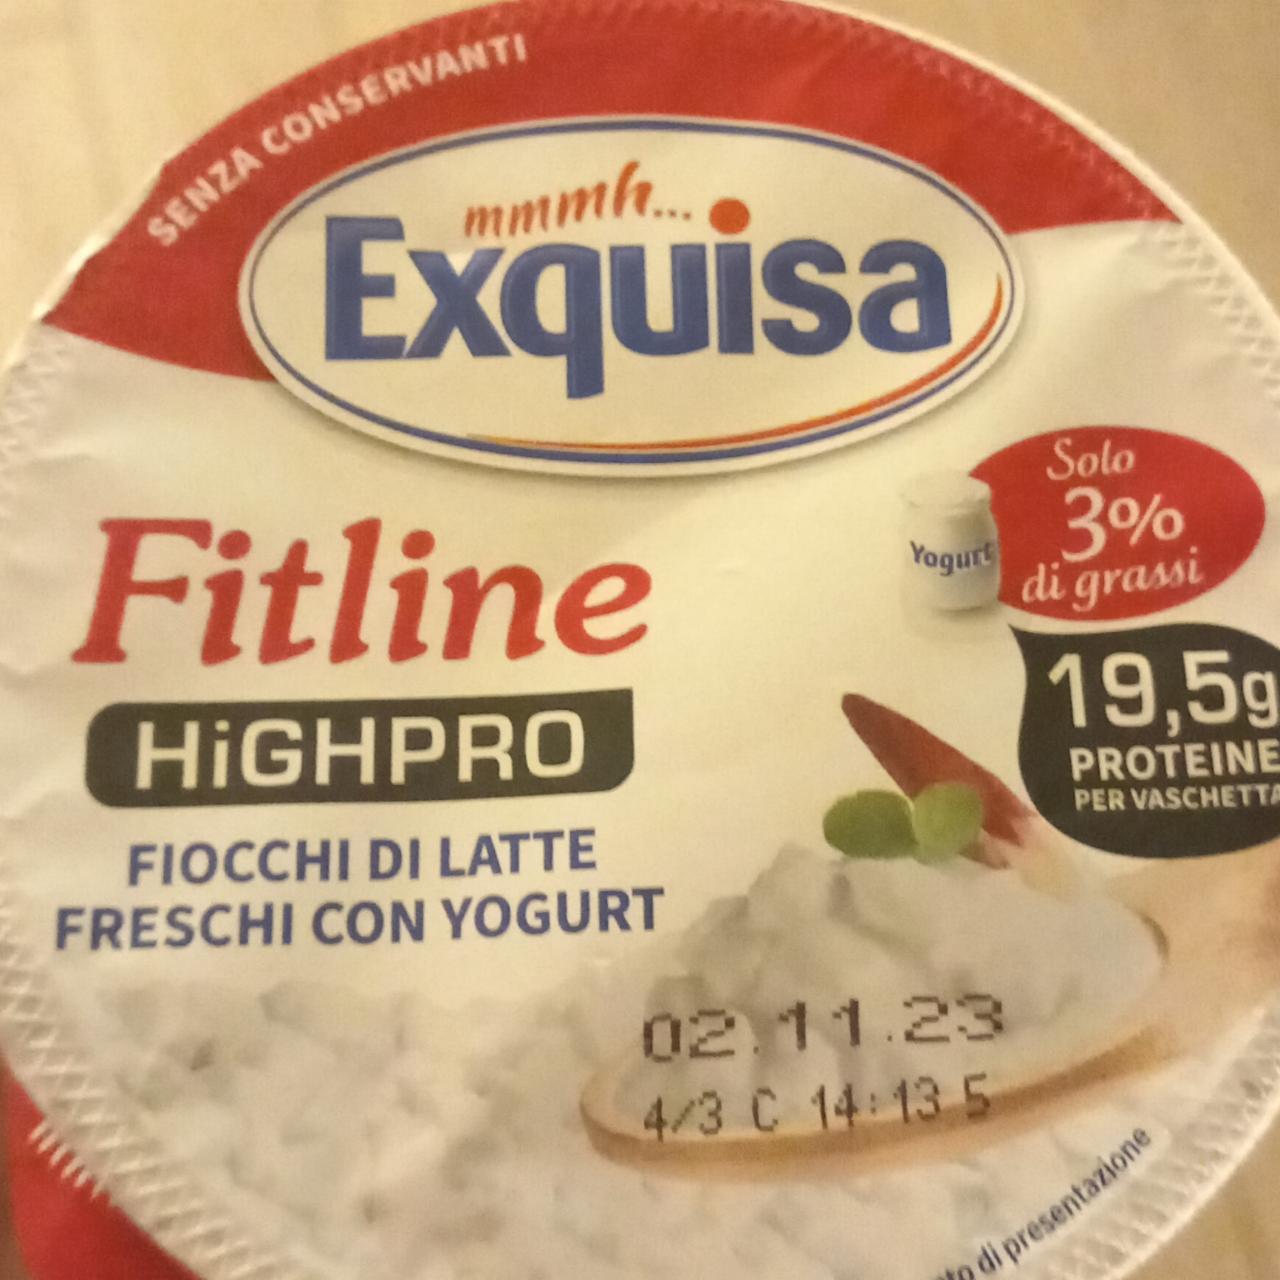 Fotografie - Fitline fiocchi di latte freschi con yogurt 3% Exquisa